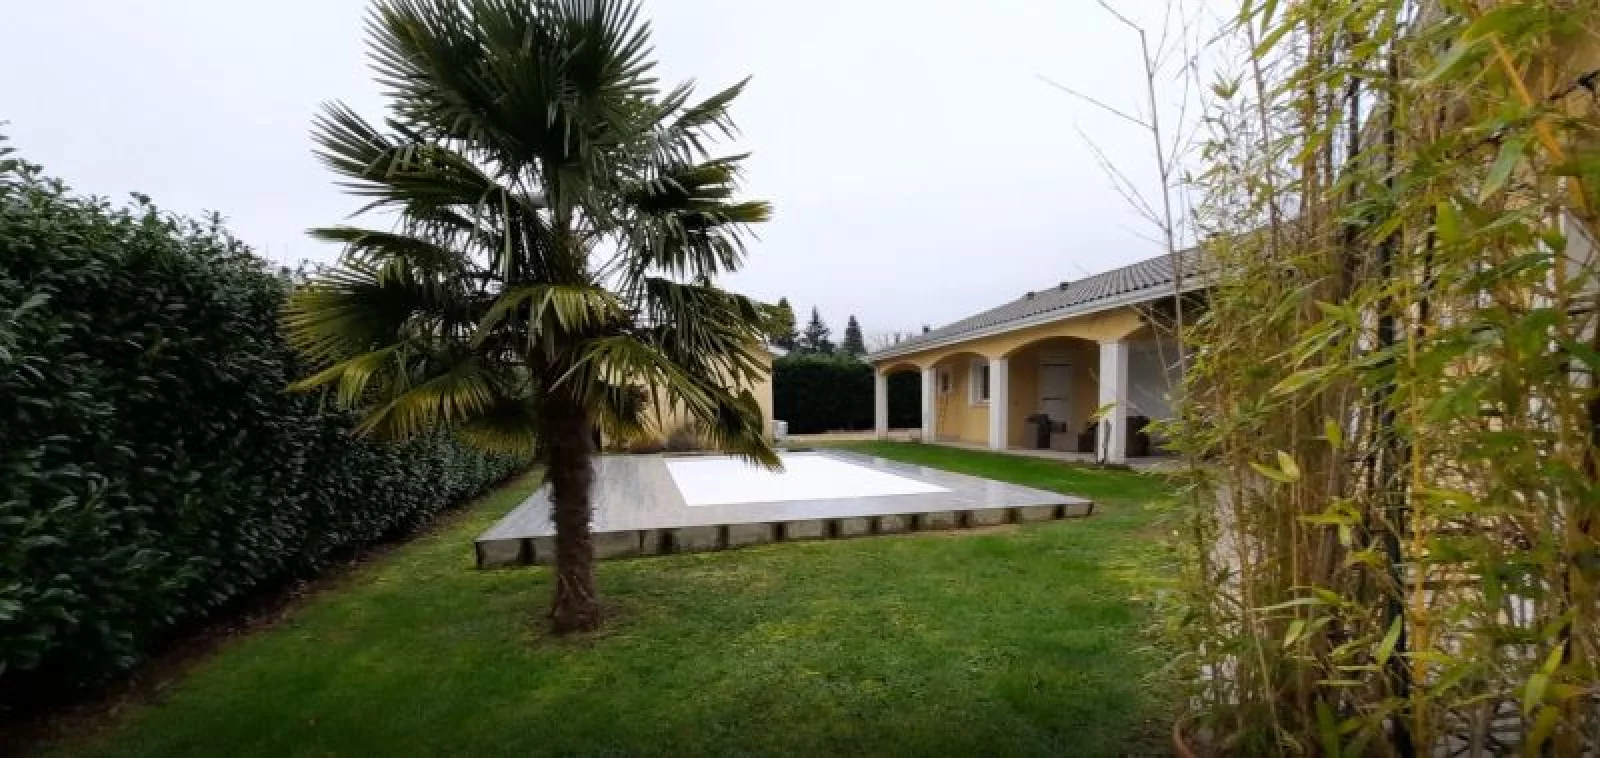 Location maison meublée 5 pièces avec piscine 185m² (Coutras, Gironde 33)